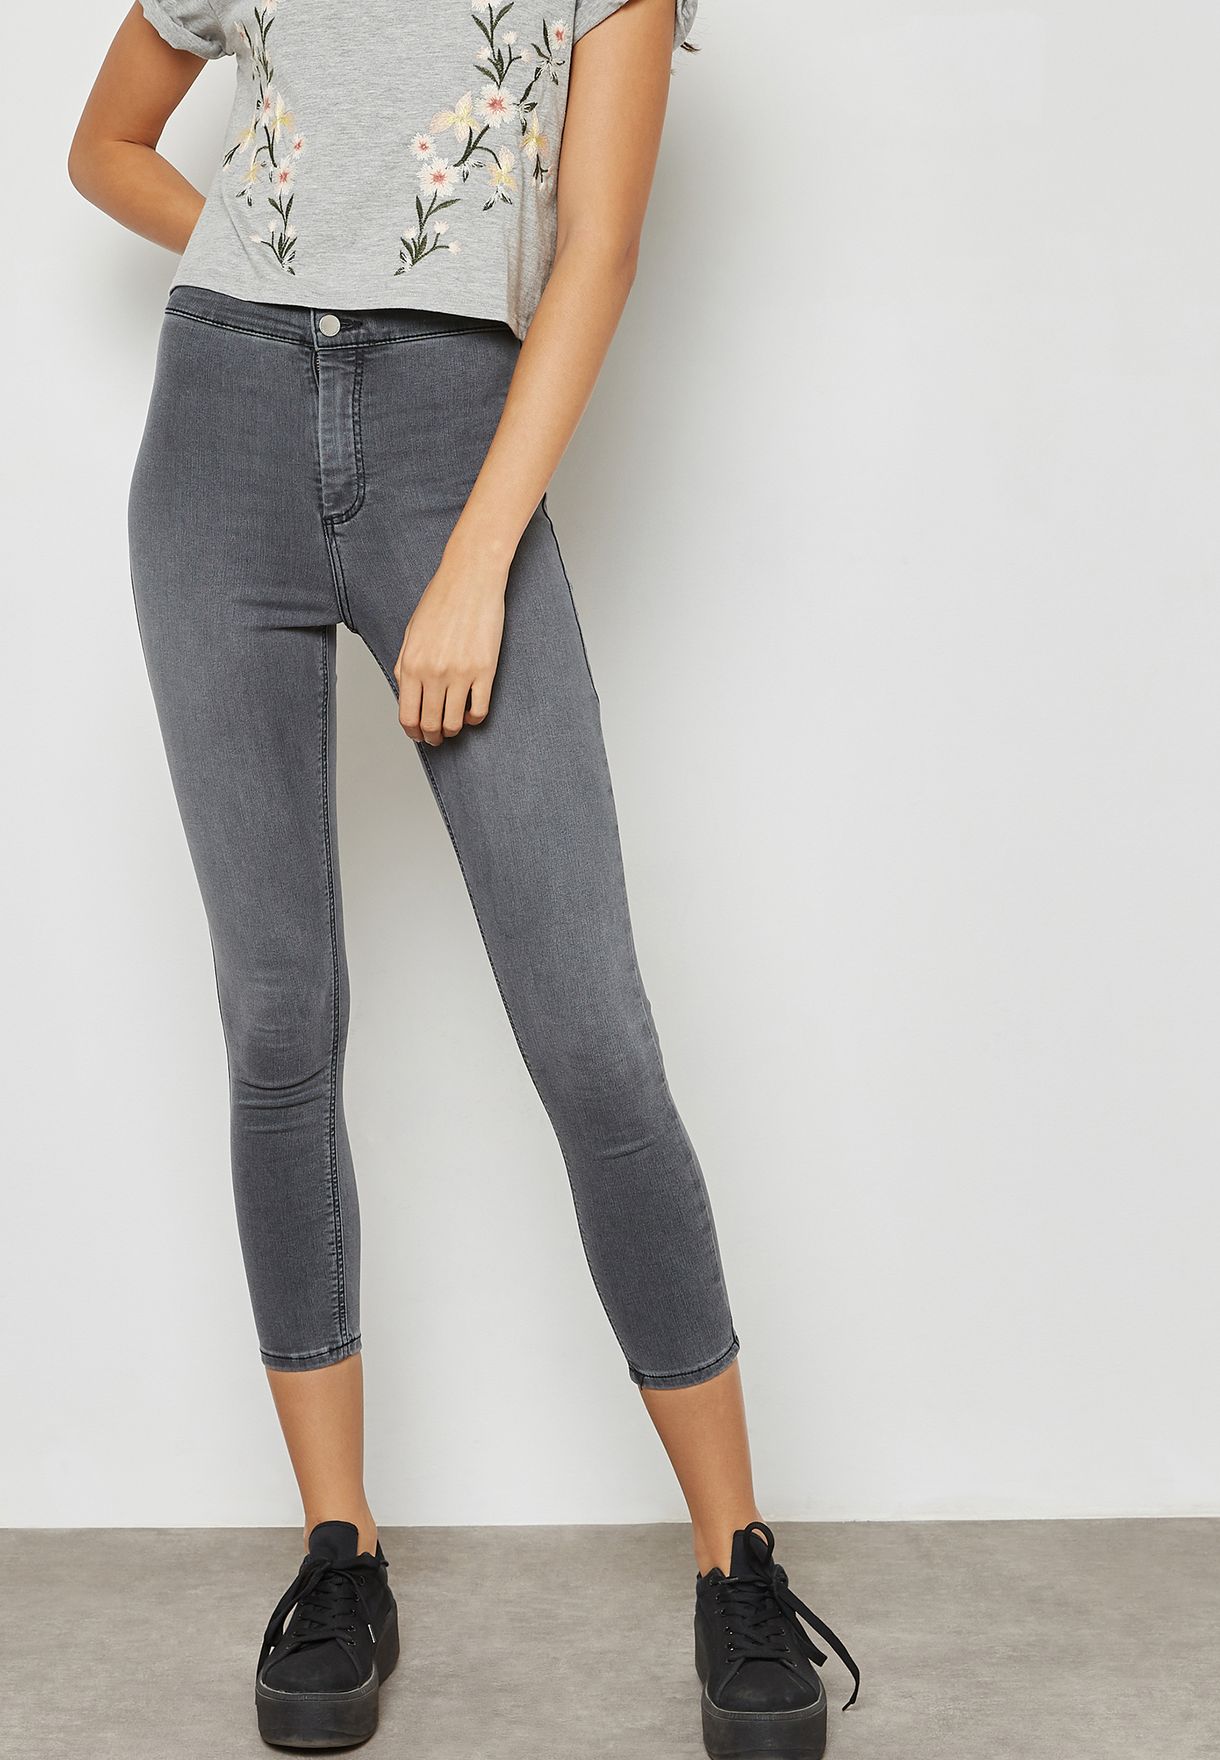 topshop grey joni jeans